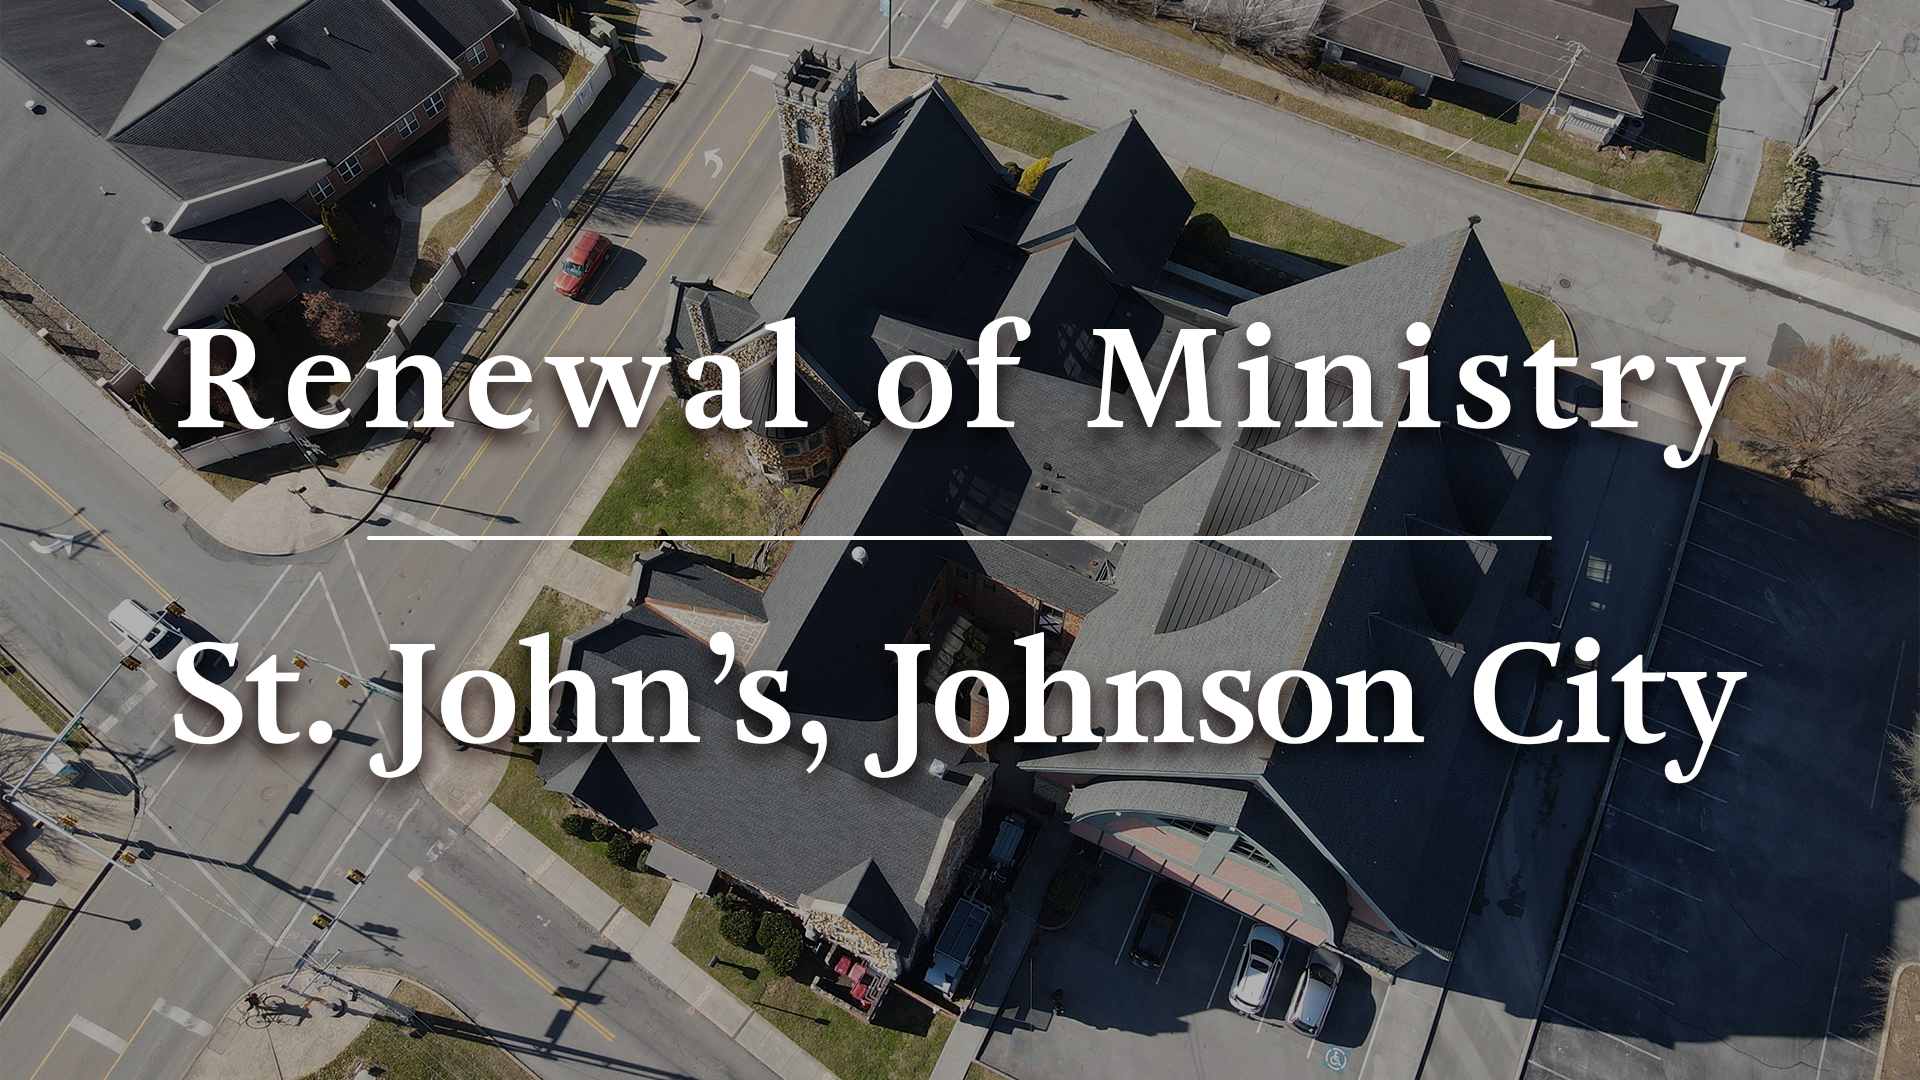 Renewal of Ministry, Drone image of St. John's Johnson City facility.